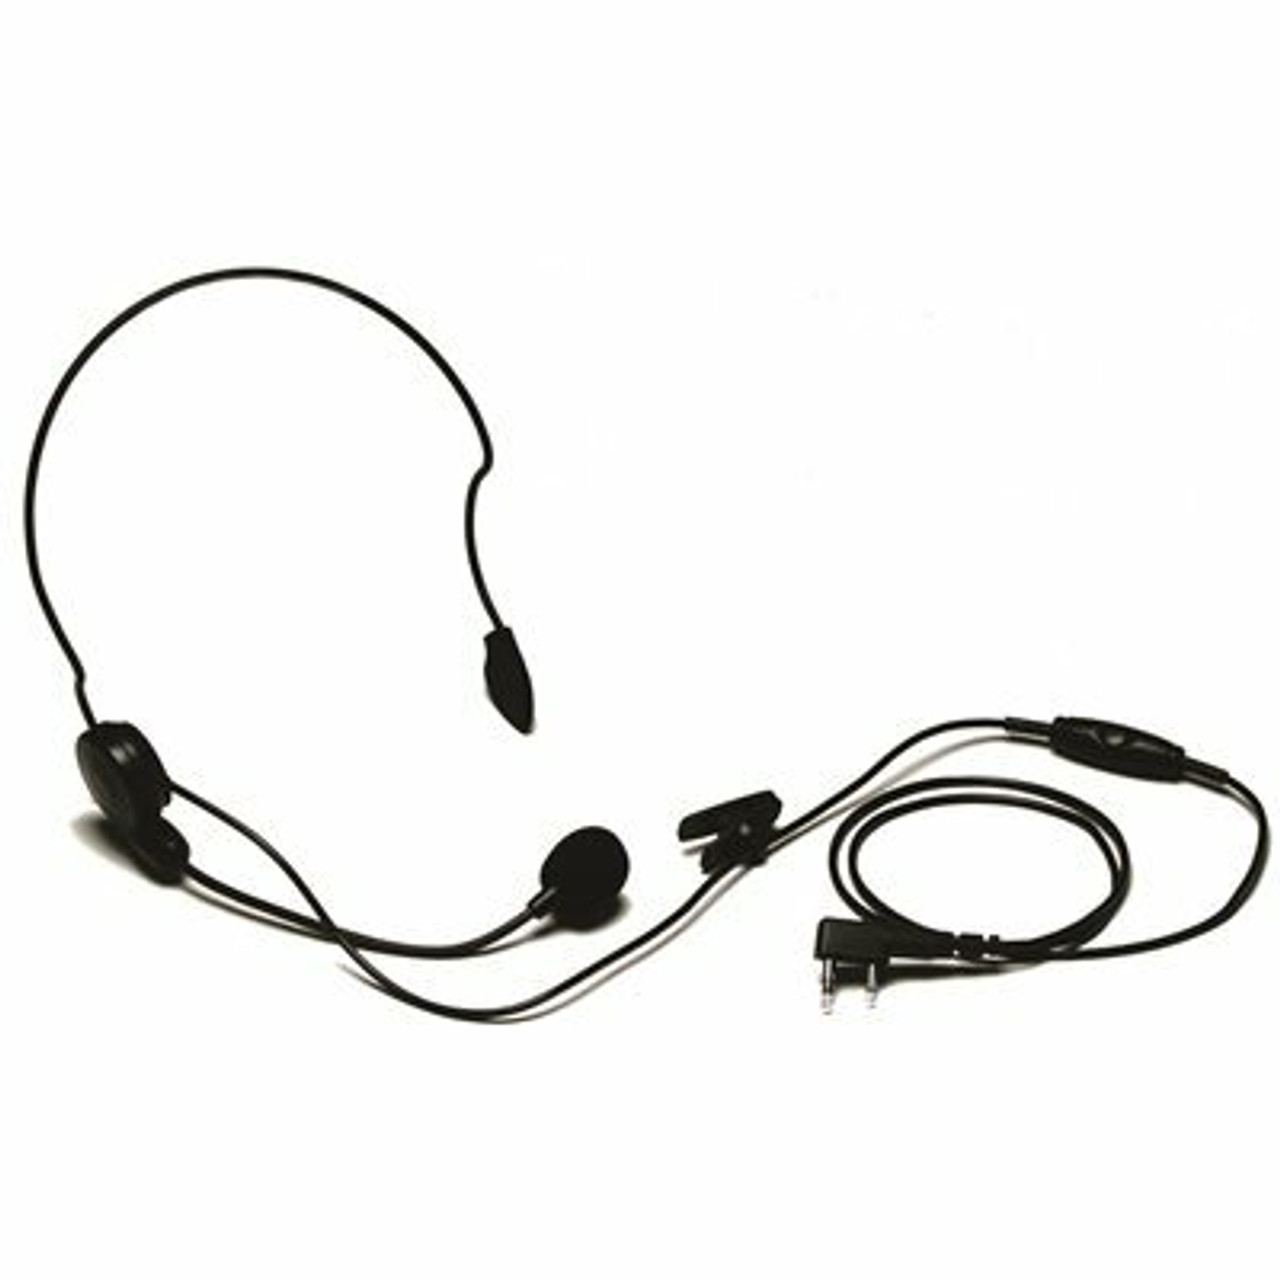 Kenwood Clip Microphone Headset With Behind The Head Earphone